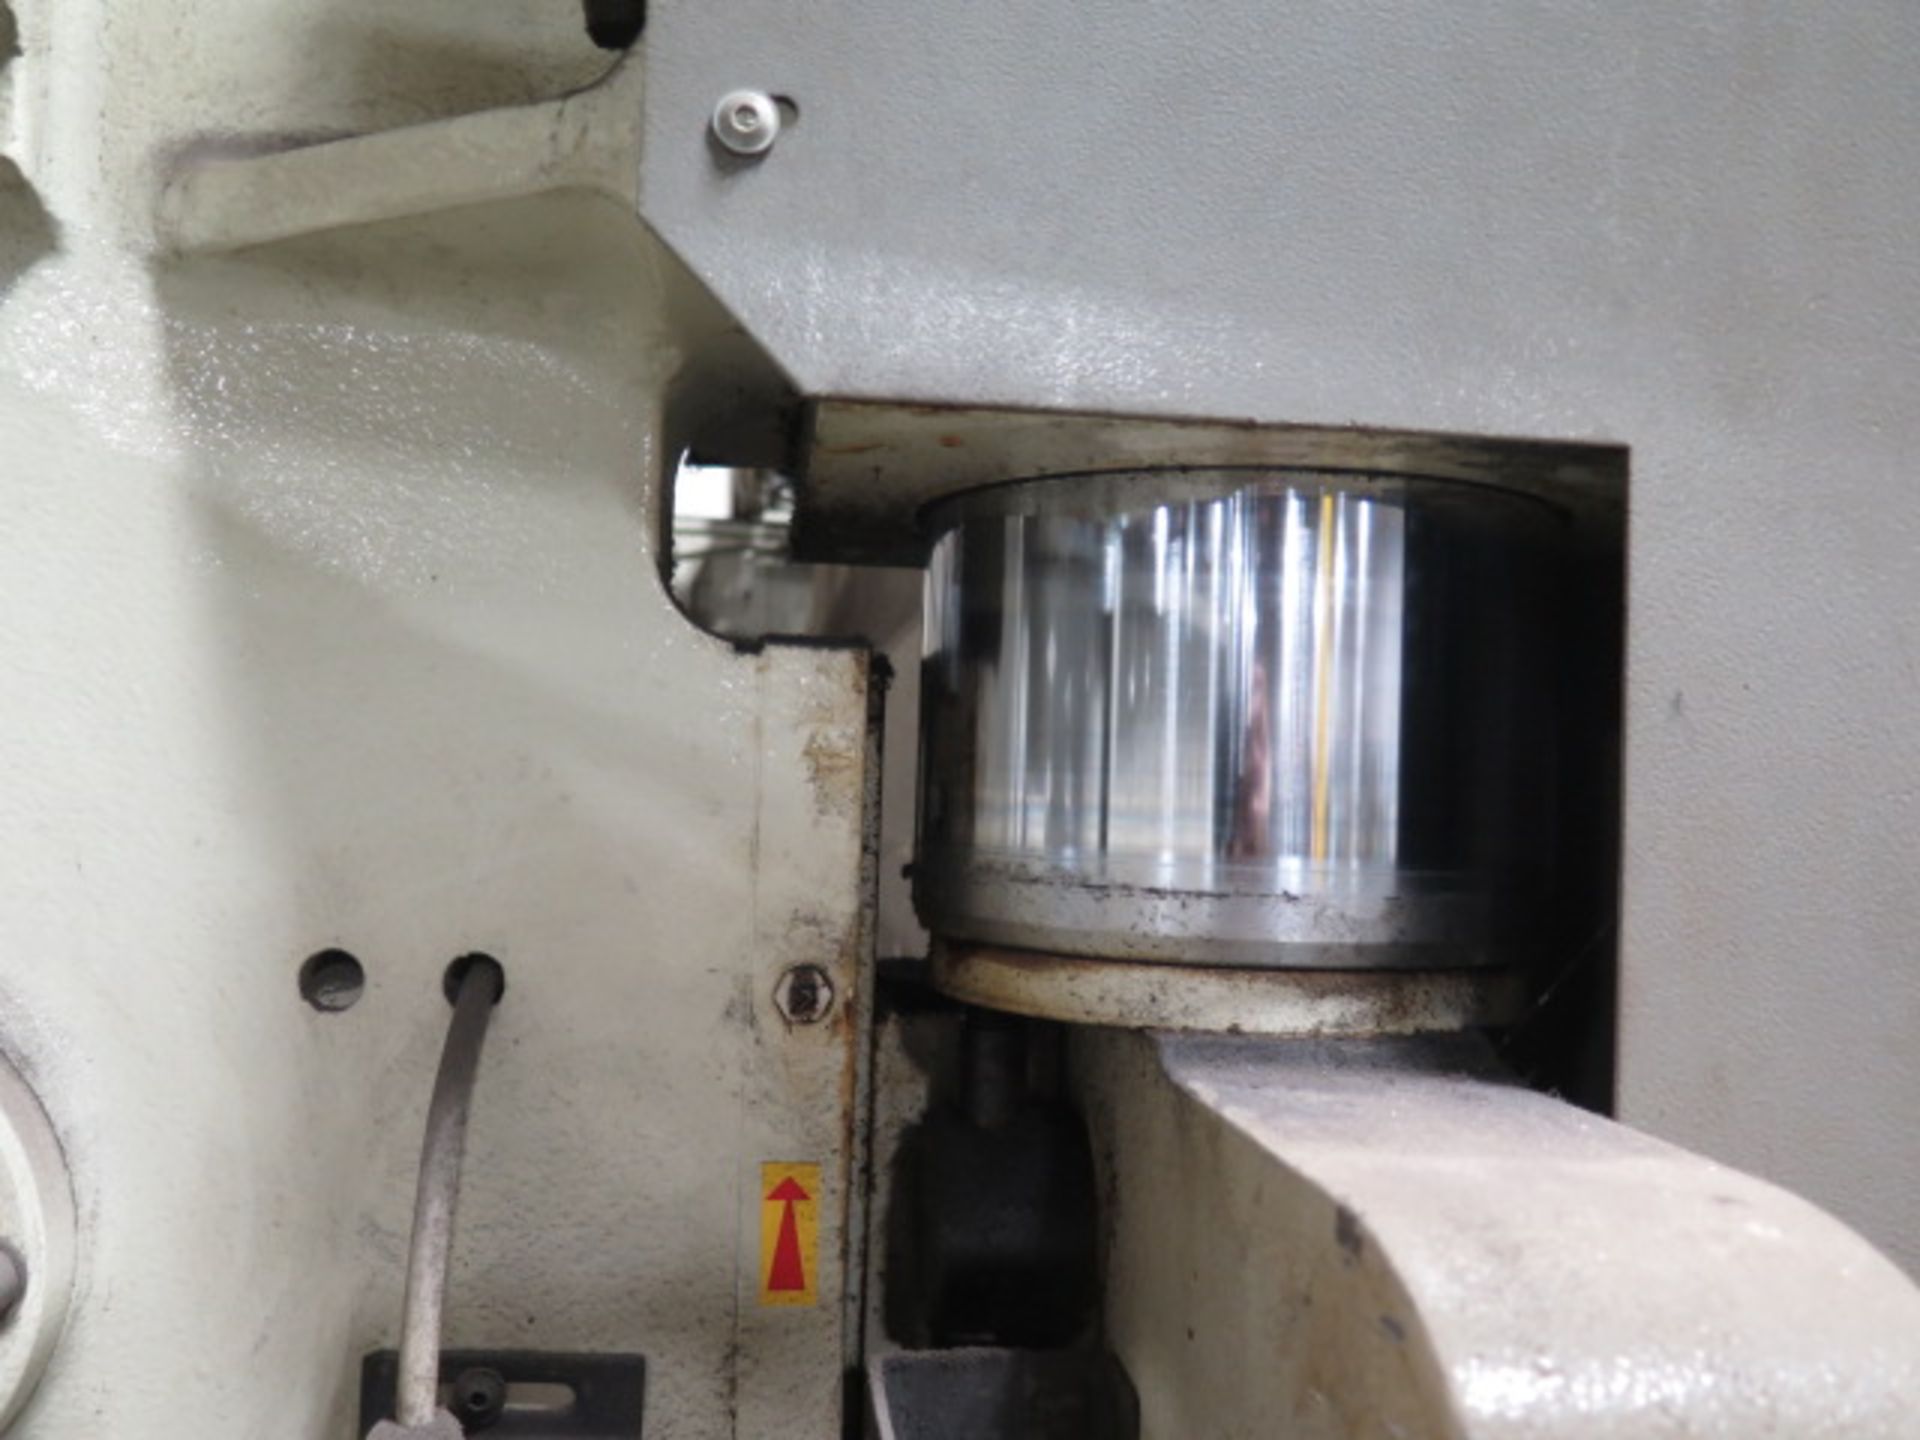 2004 Durma HAP-37160 160 Ton x 12' CNC Hydr Press Brake s/n 7054045462 w/ Durma ENC-310, SOLD AS IS - Image 8 of 18